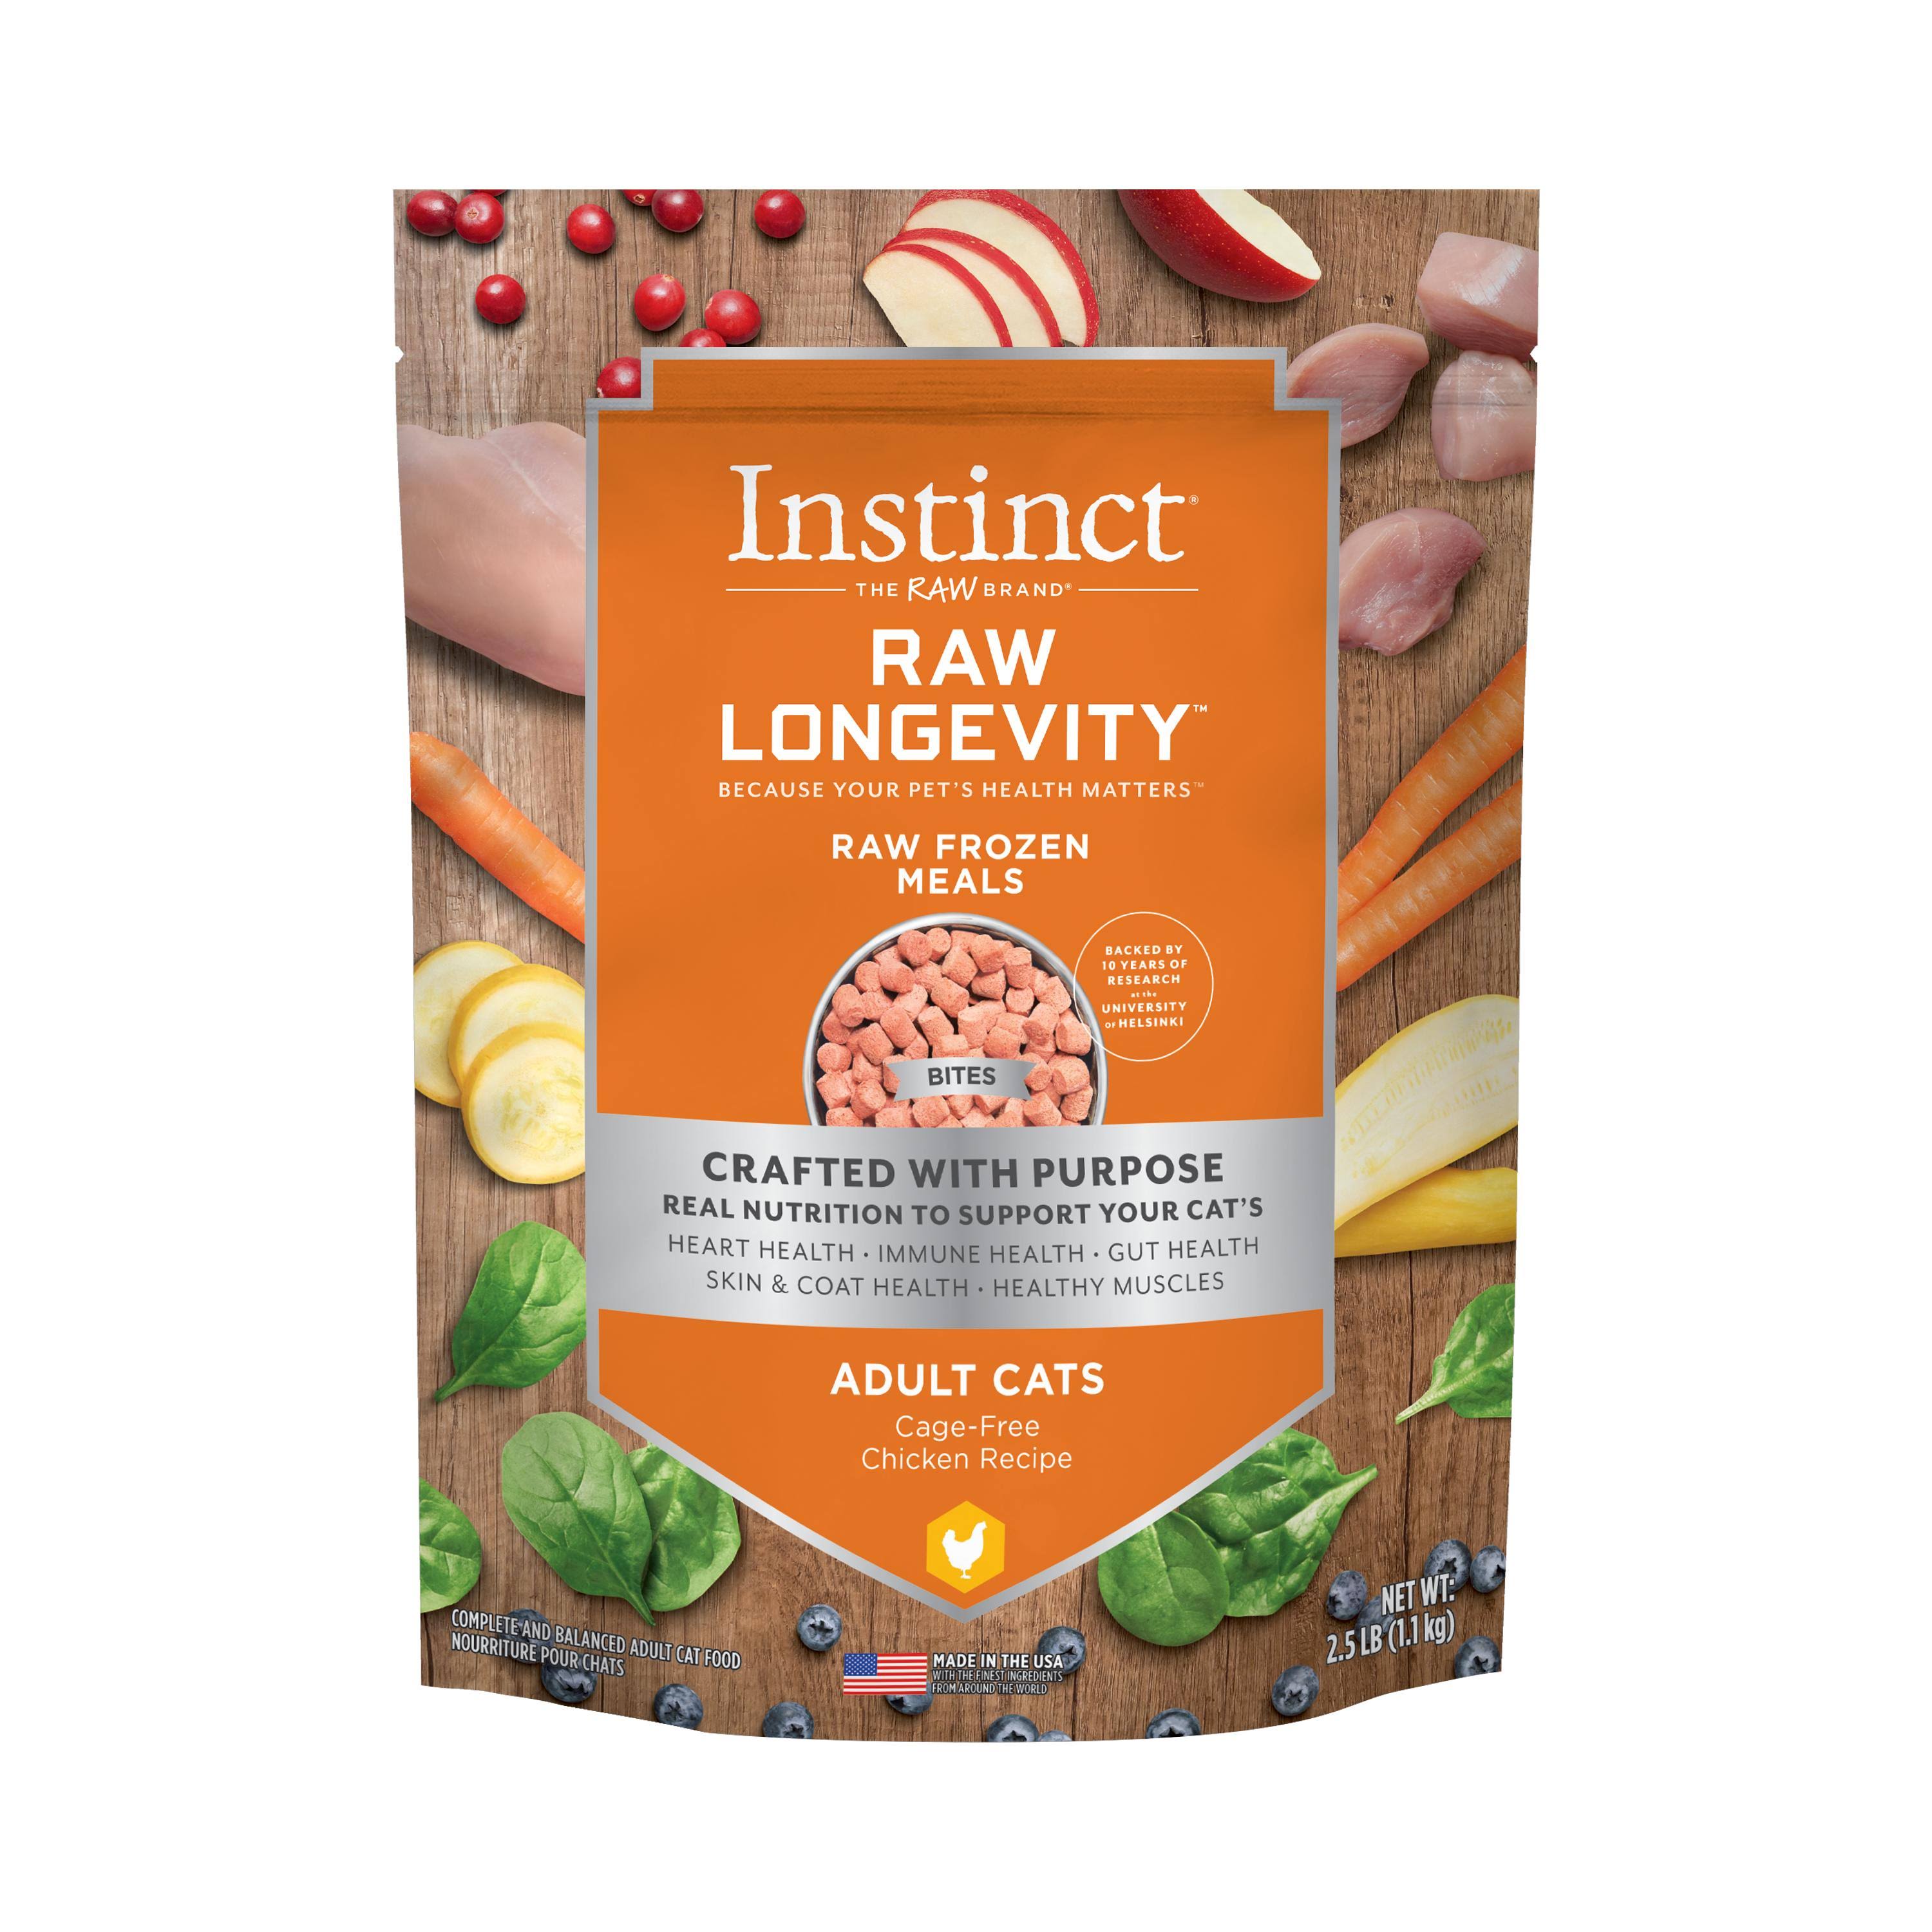 Instinct Raw Longevity Bites Cage-Free Chicken Frozen Cat Food, 2.5-lb